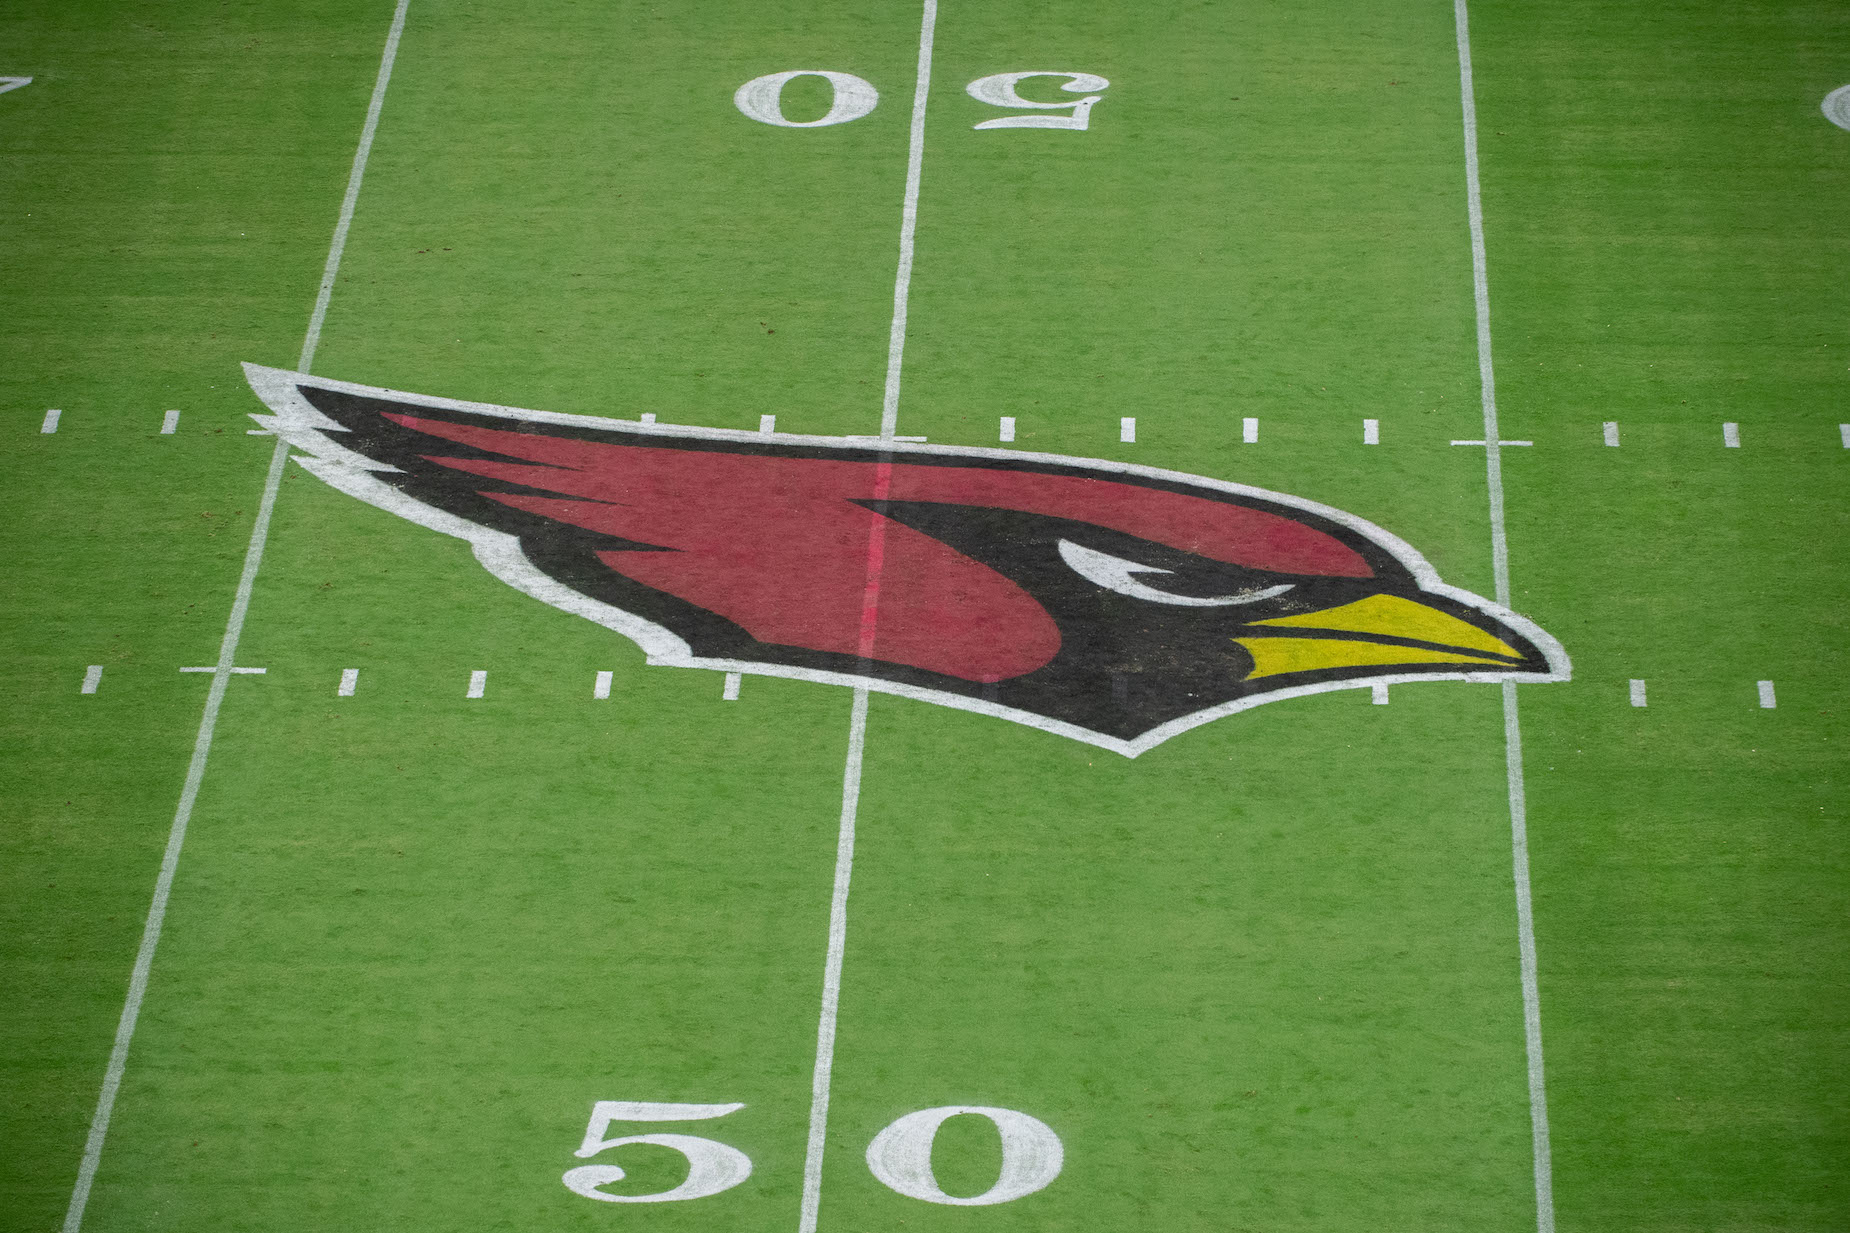 The on-field logo of the Arizona Cardinals, who recently landed J.J. Watt in free agency.